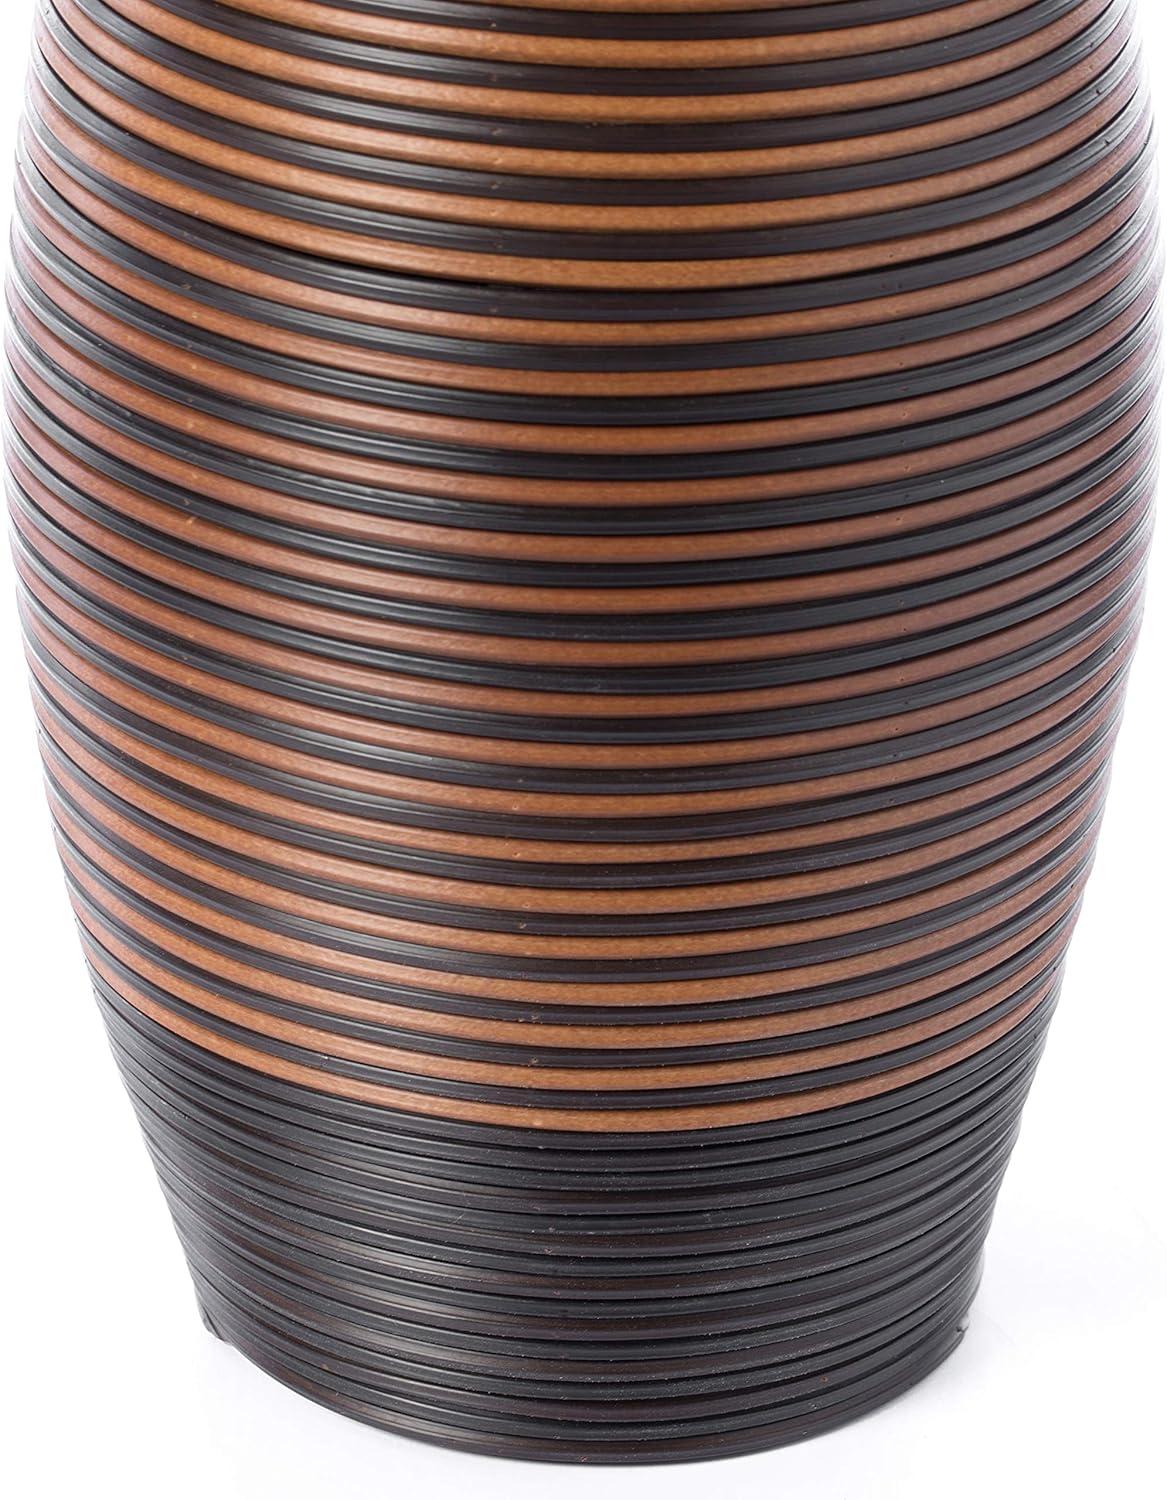 Elegant Tall Brown PVC Decorative Floor Vase